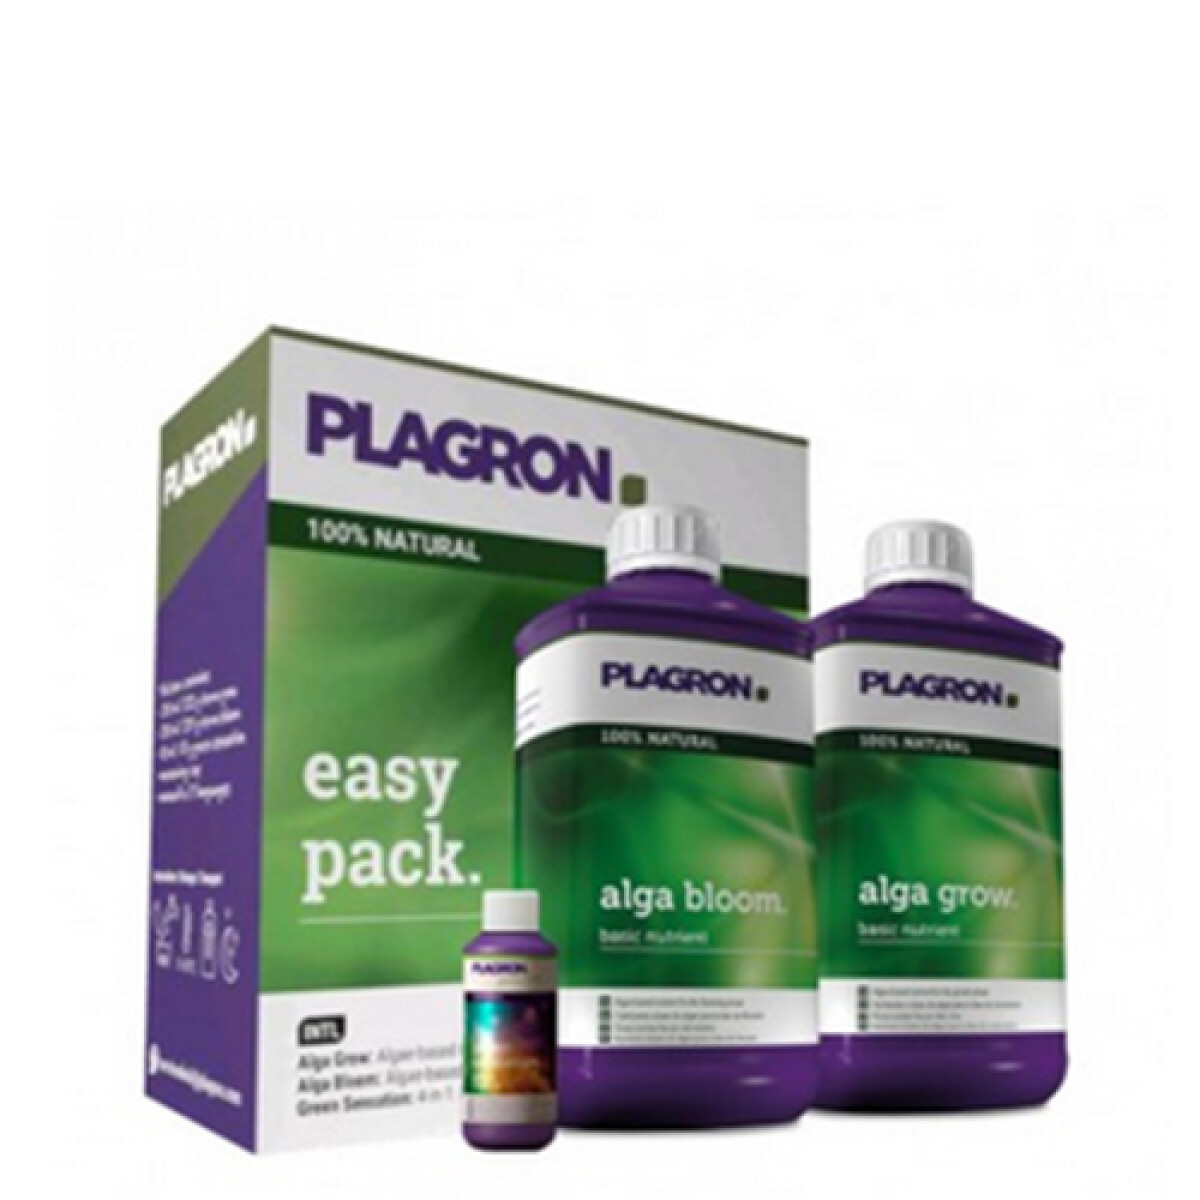 EASY PACK 100% NATURAL PLAGRON 